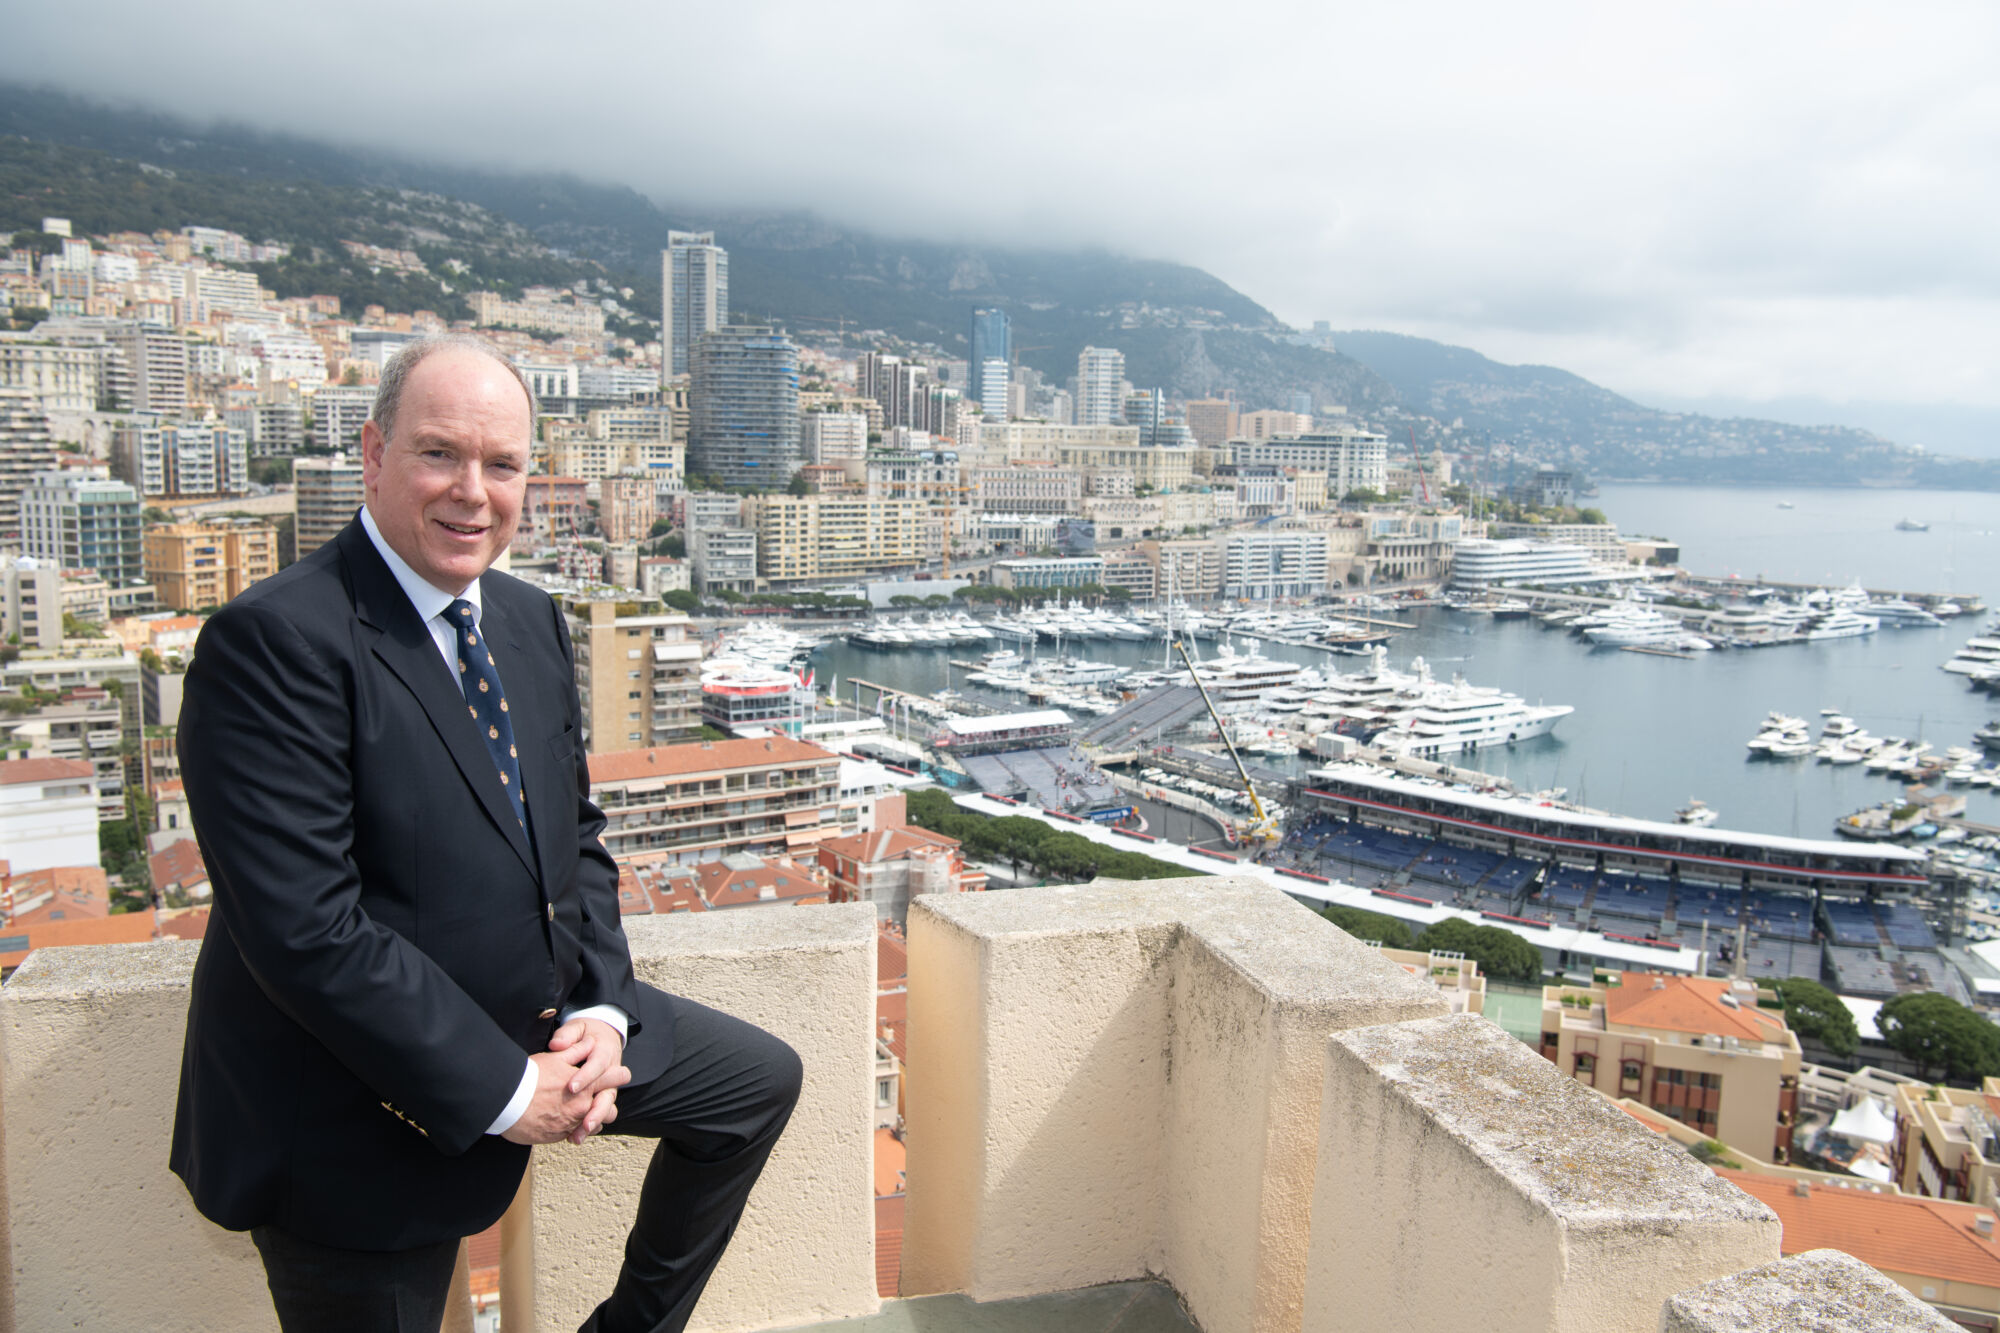 The Wick - Summit Guest of Honour: His Serene Highness Prince Albert II of Monaco